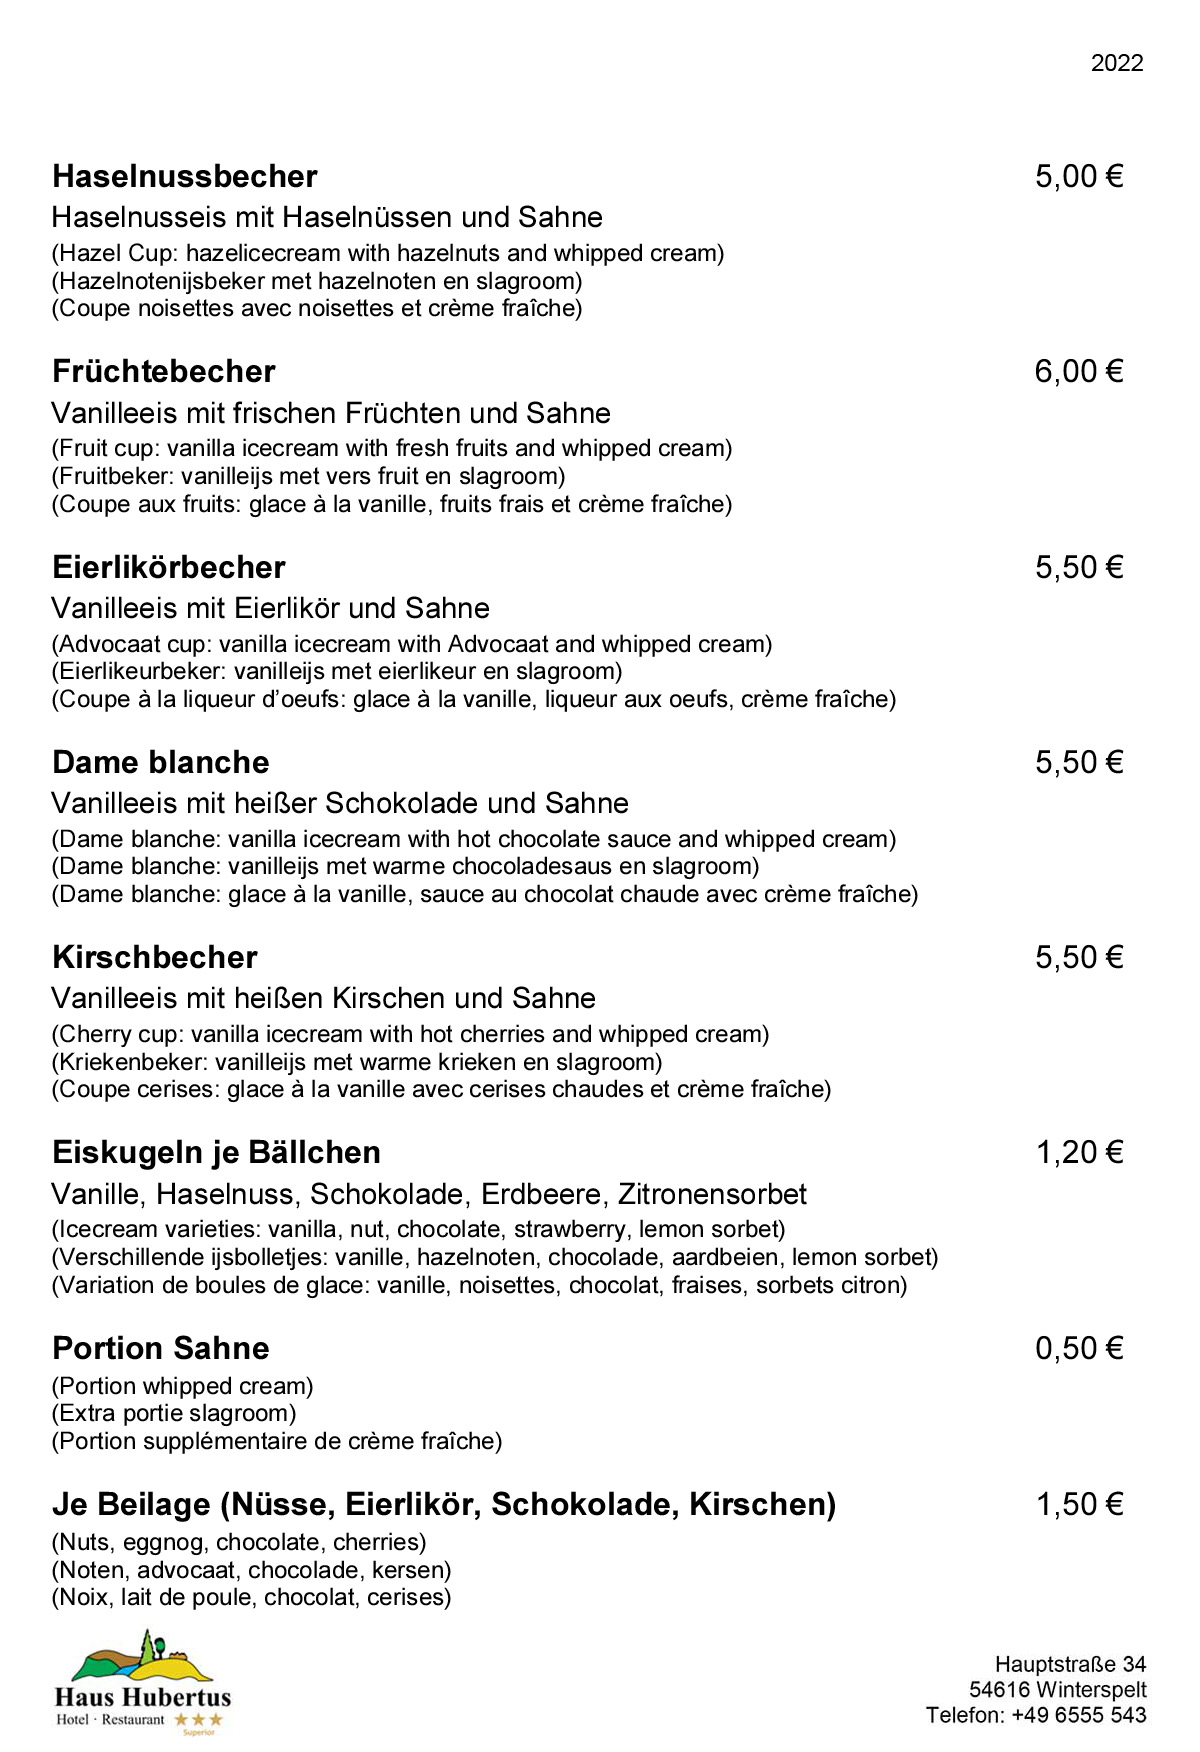 Hotel - Restaurant Haus Hubertus - menu 07/2022 - our classics - page 4